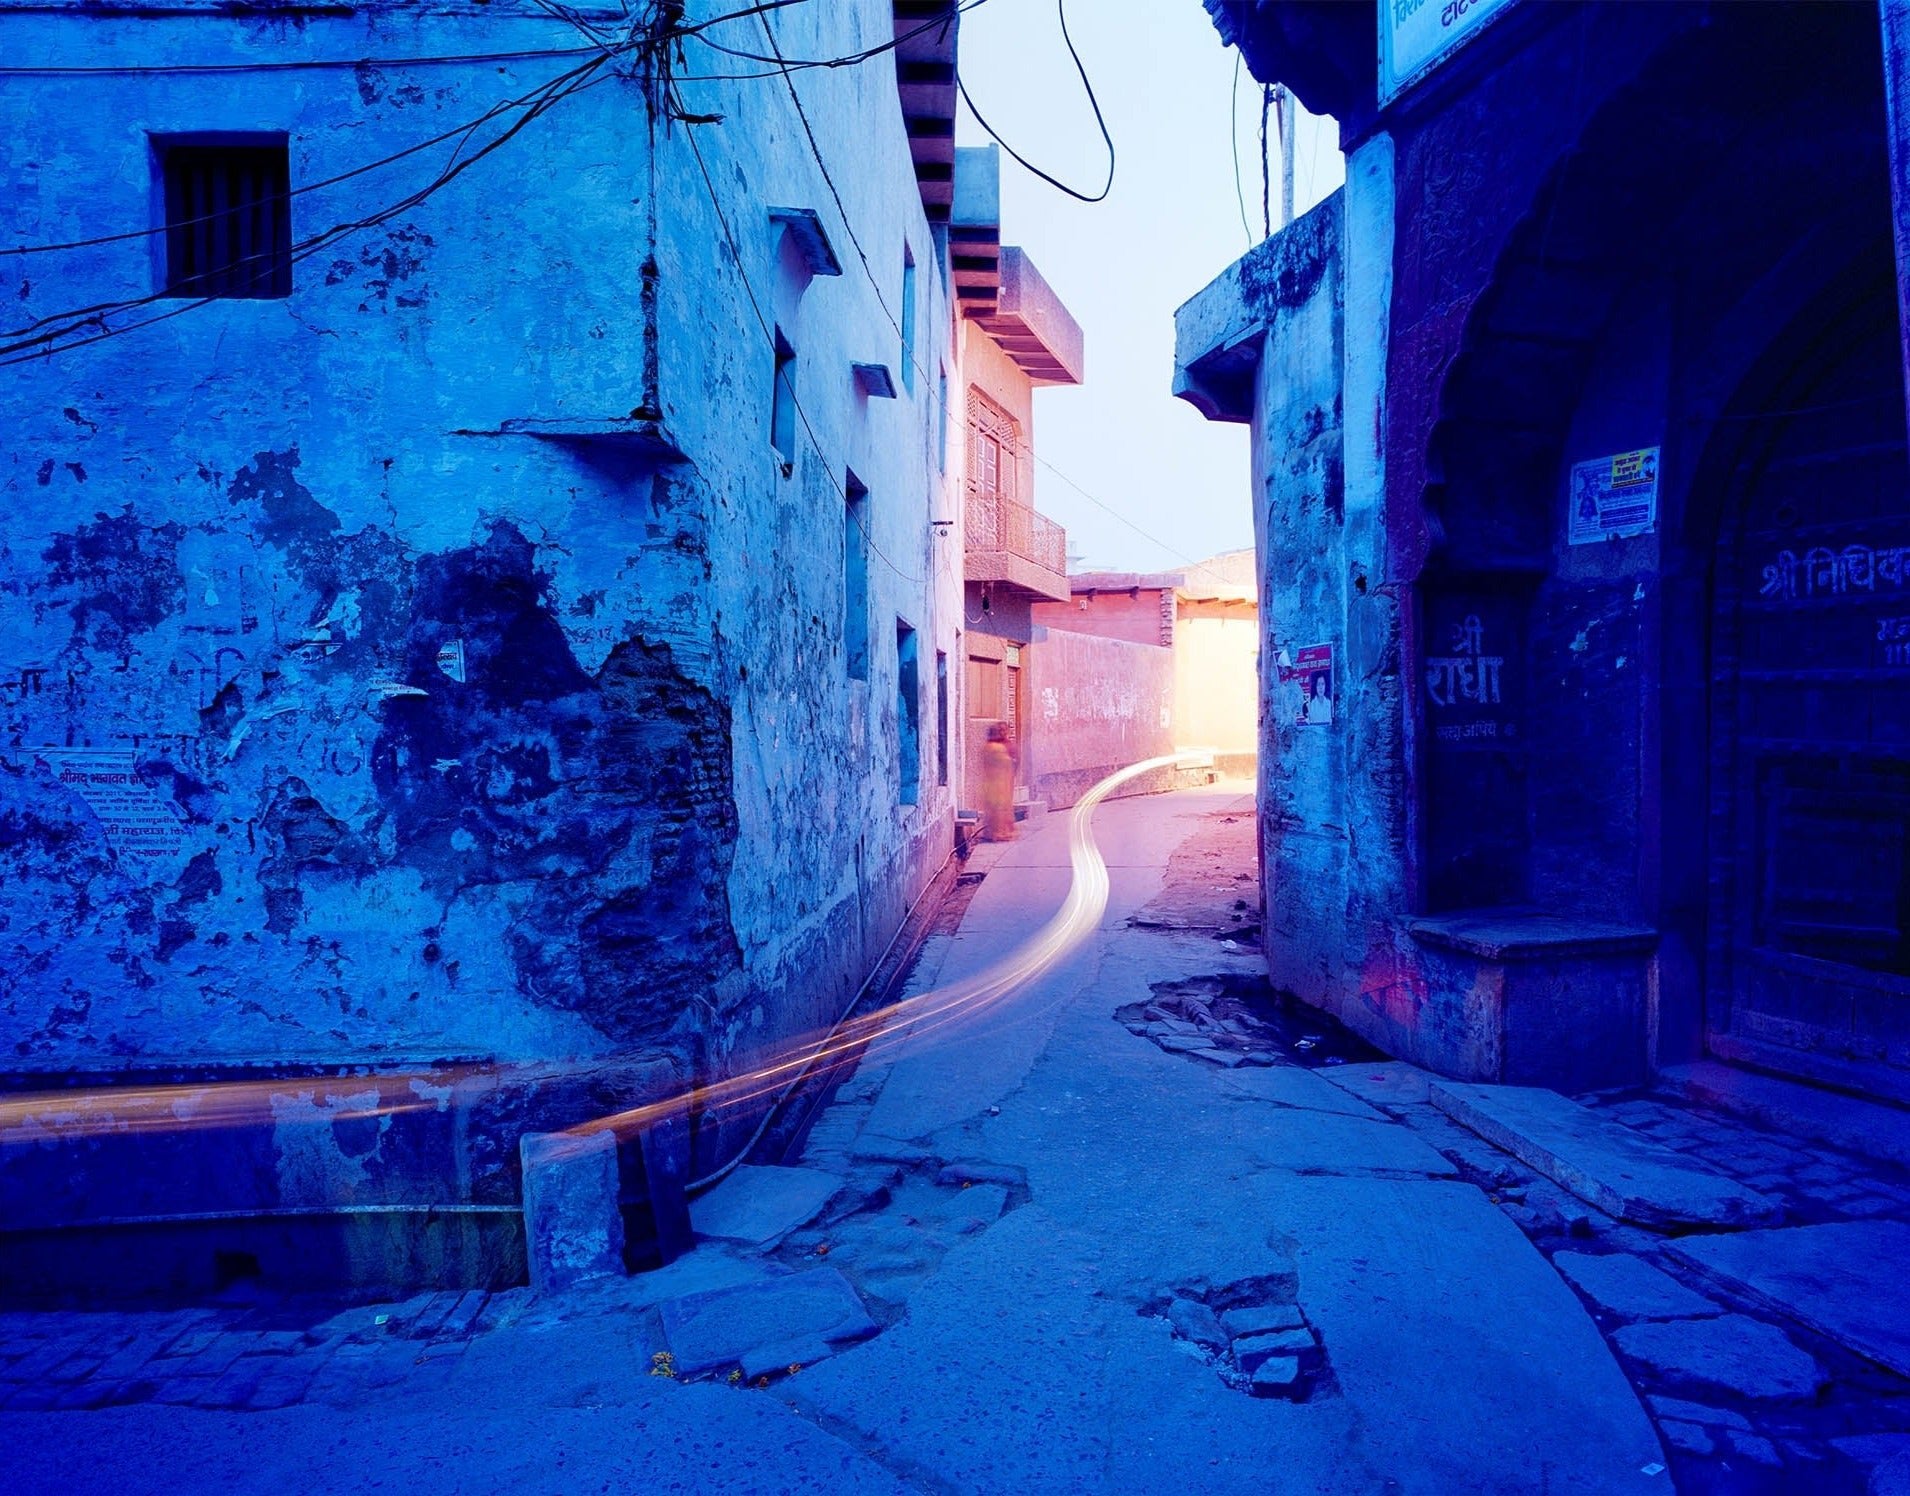 BLUE STREET CORNER, INDIA